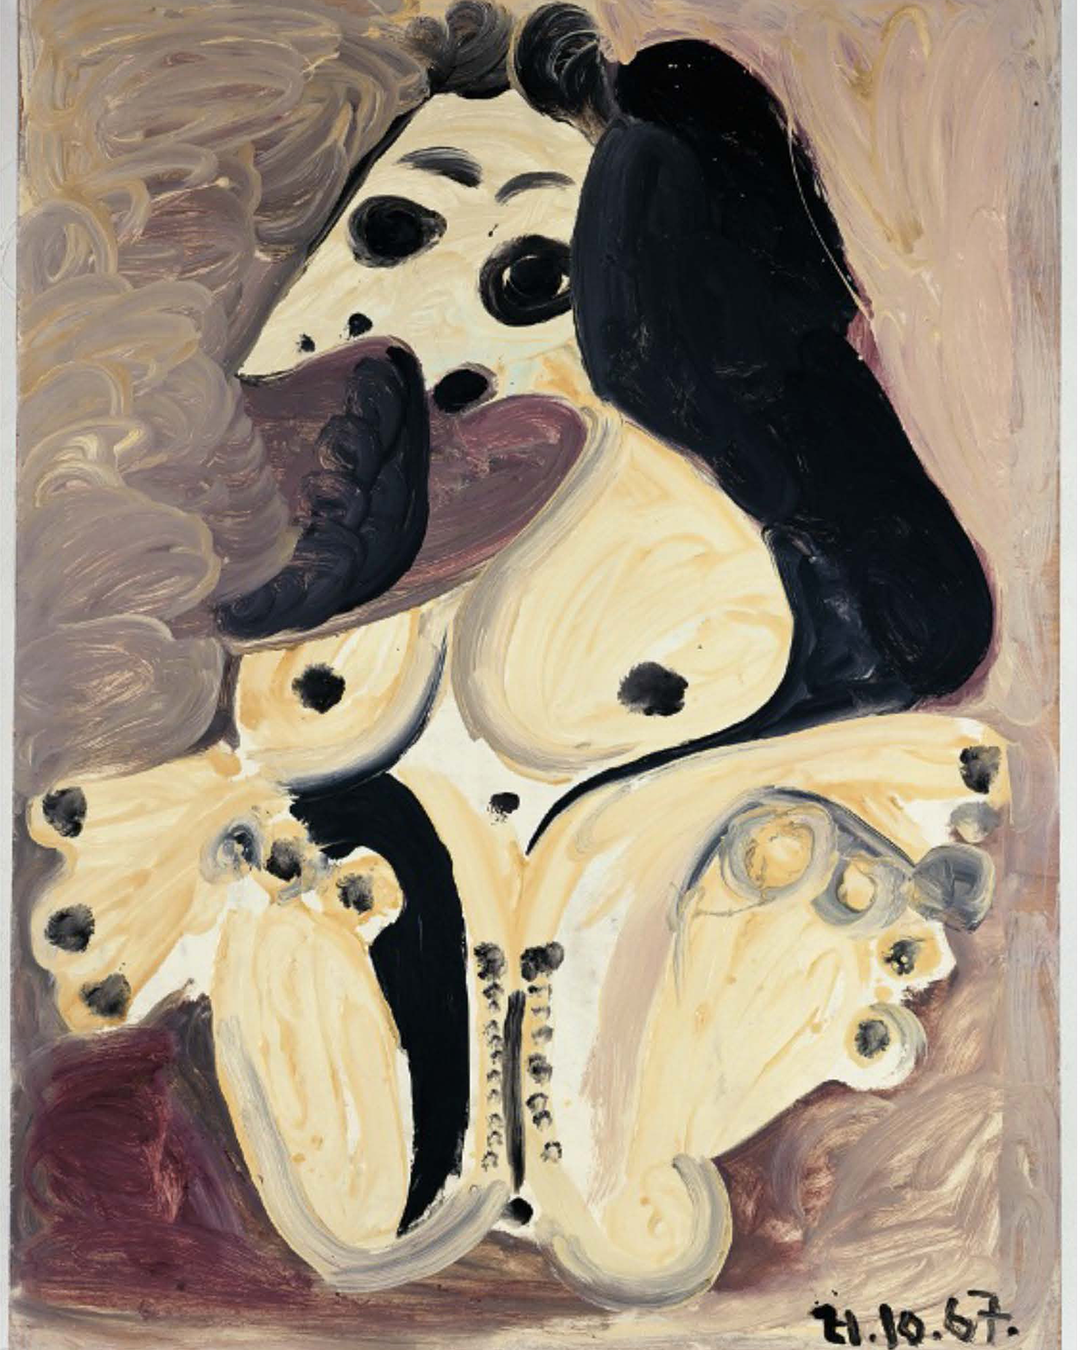 "Portrait of Jill Magid" by Pablo Picasso